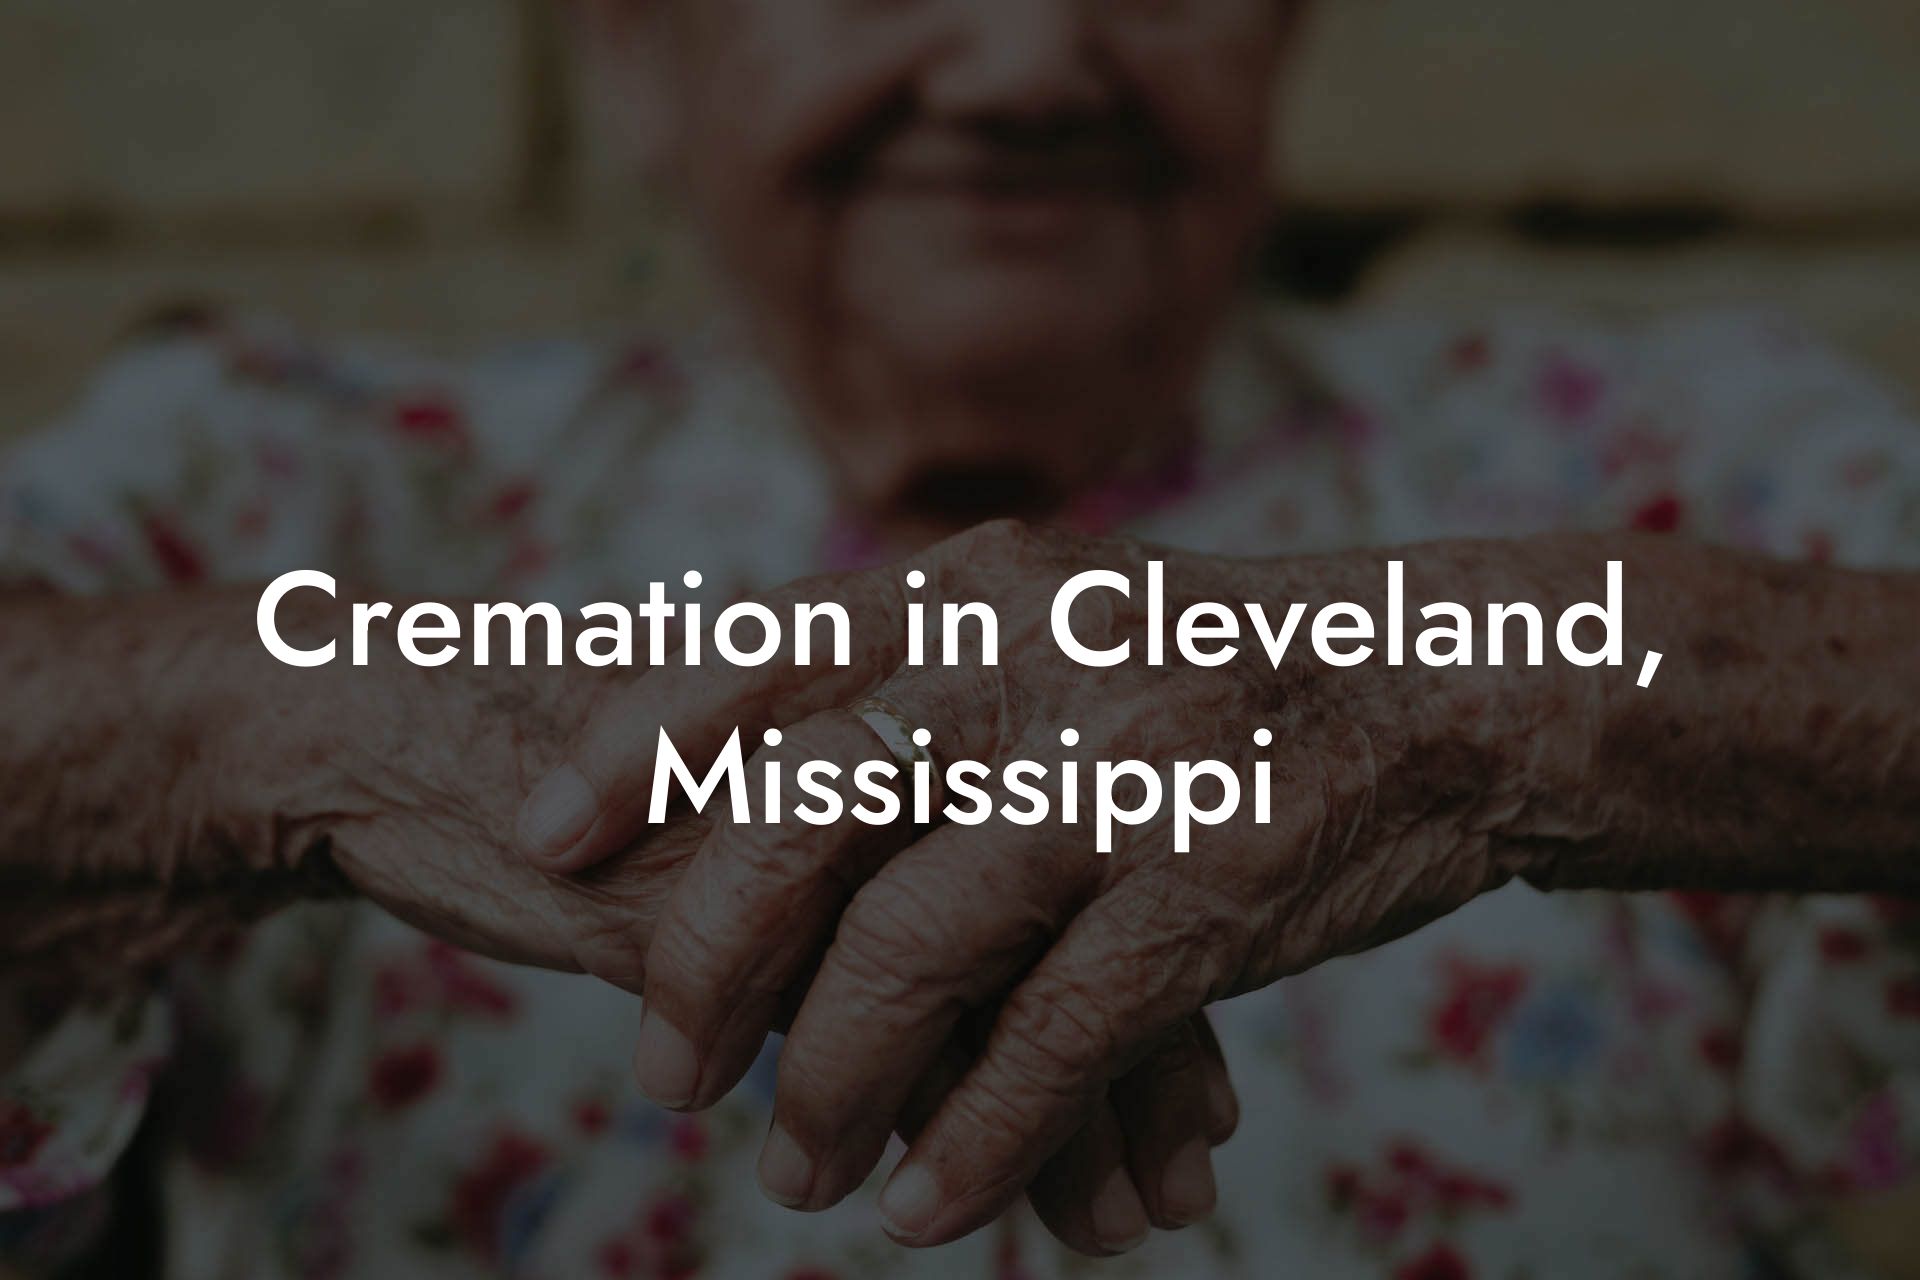 Cremation in Cleveland, Mississippi